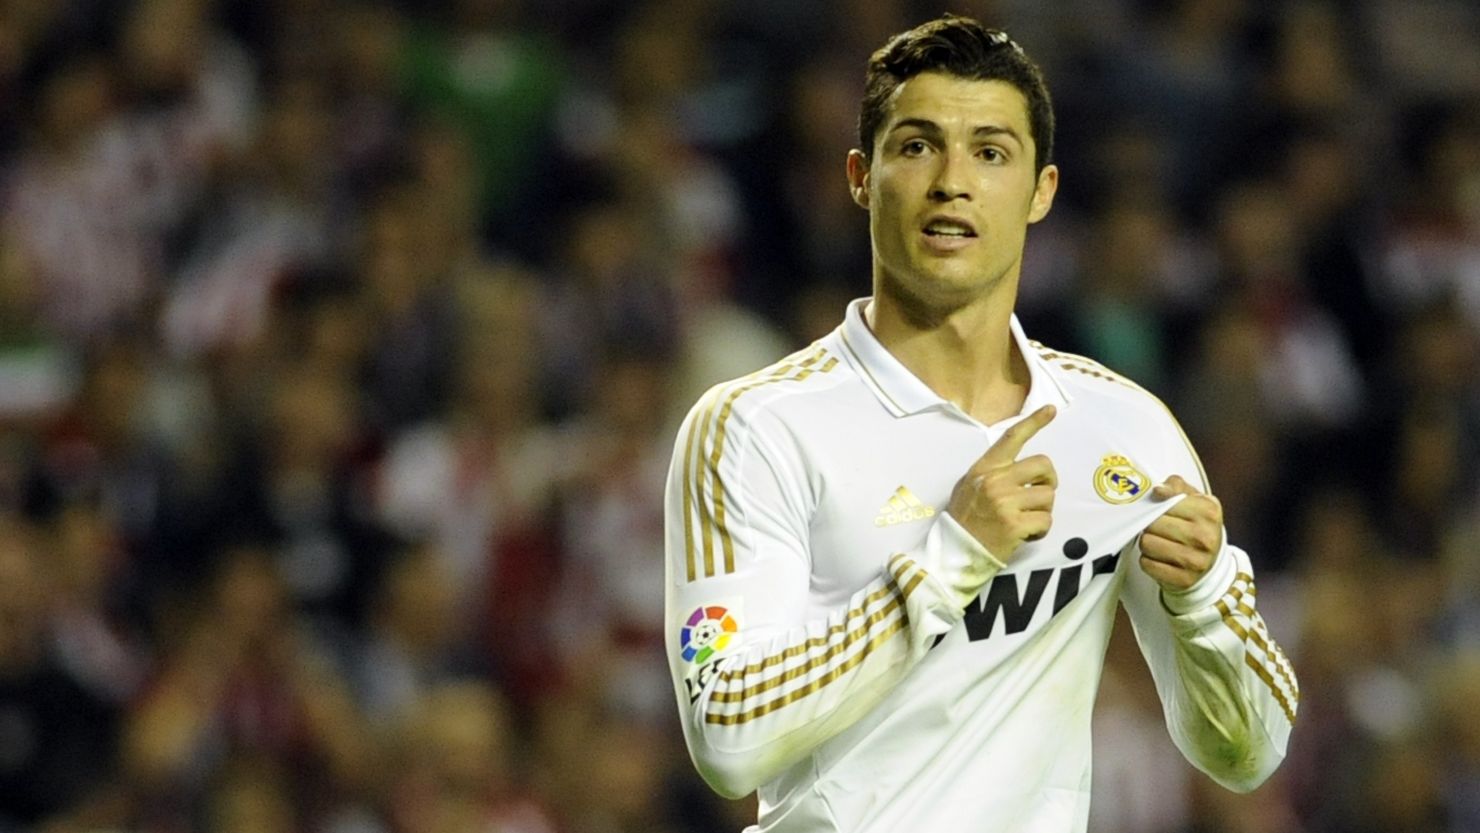 Cristiano Ronaldo celebrates Real Madrid's La Liga title - his first with the Spanish club